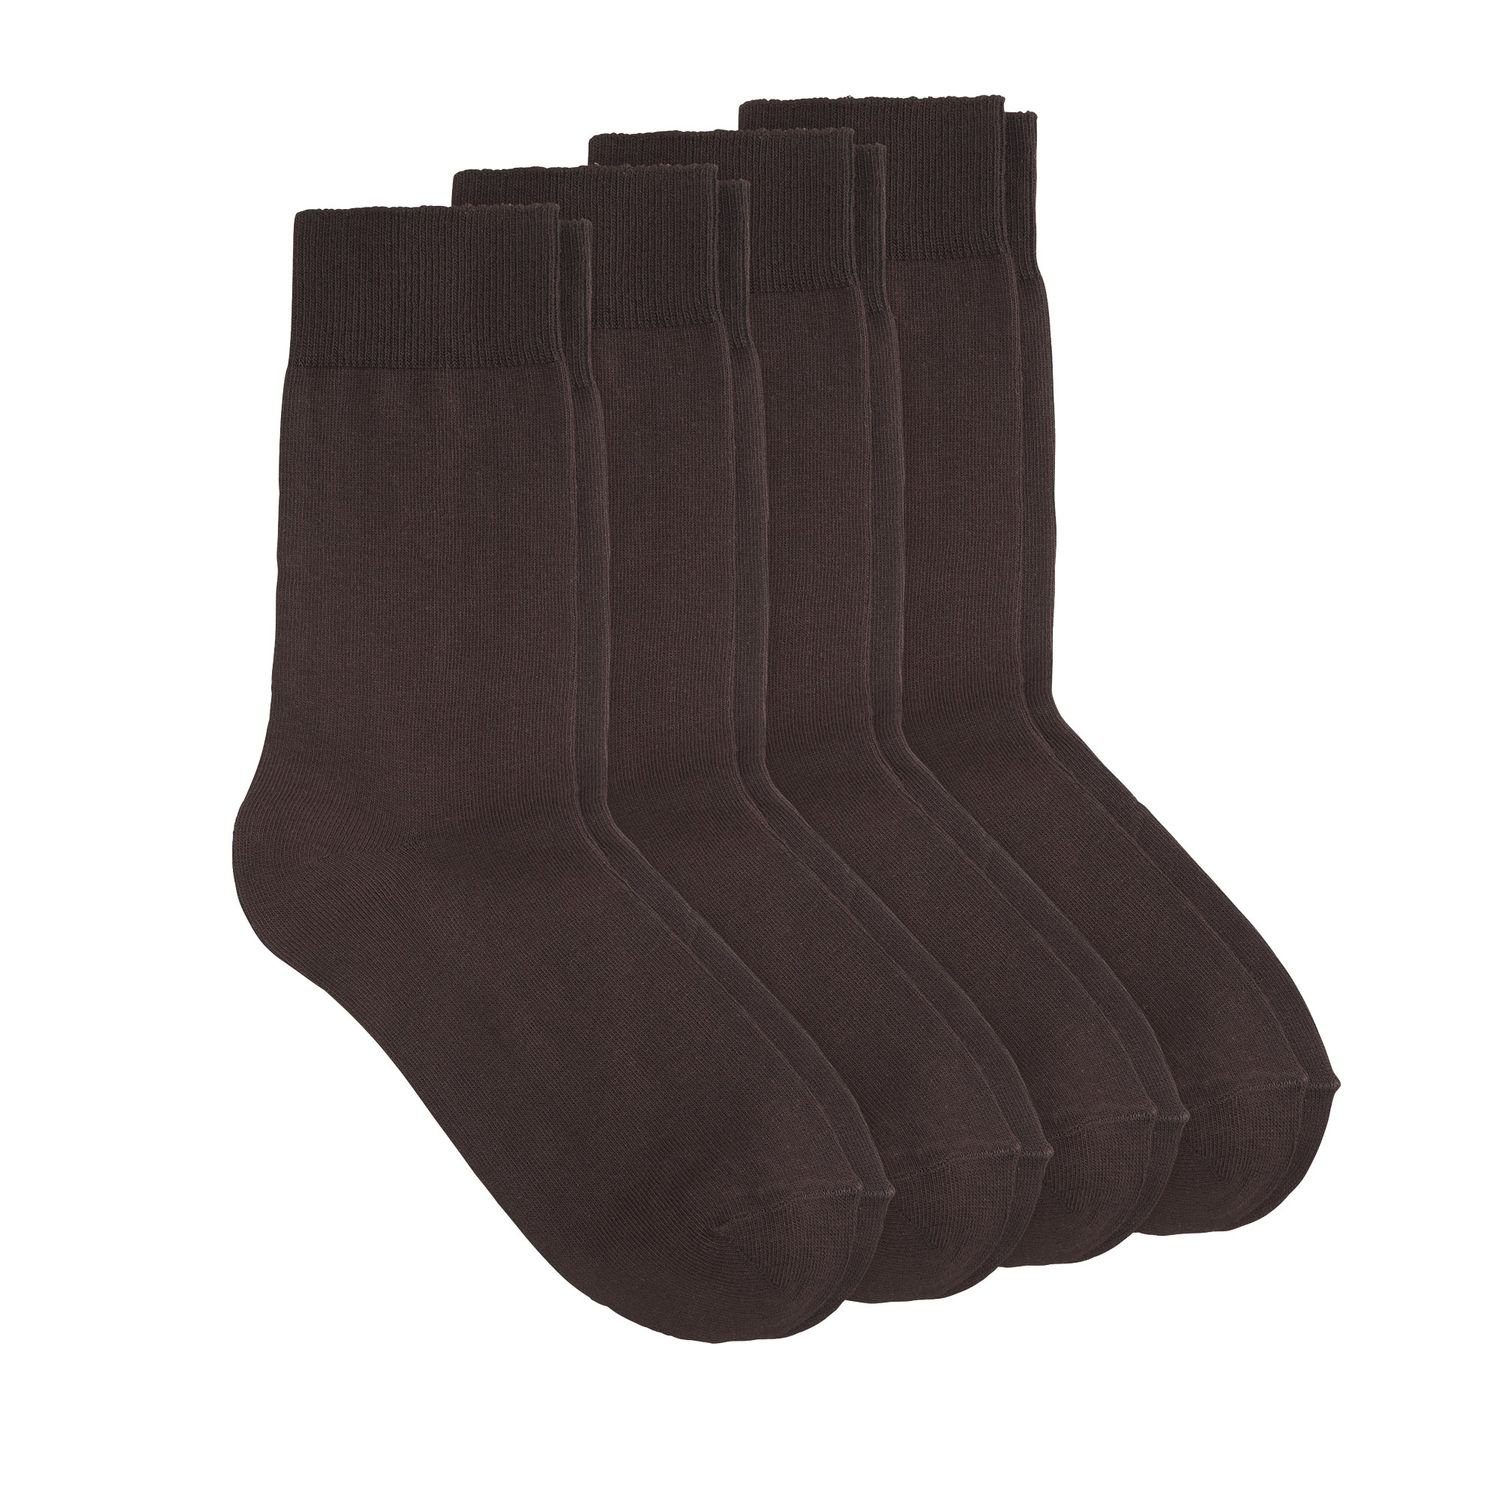 MUSTANG Socken Unisex Basic Socks (24-Paar) mit geripptem rutschfesten Komfortbund, 24 Paar dunkelbraun